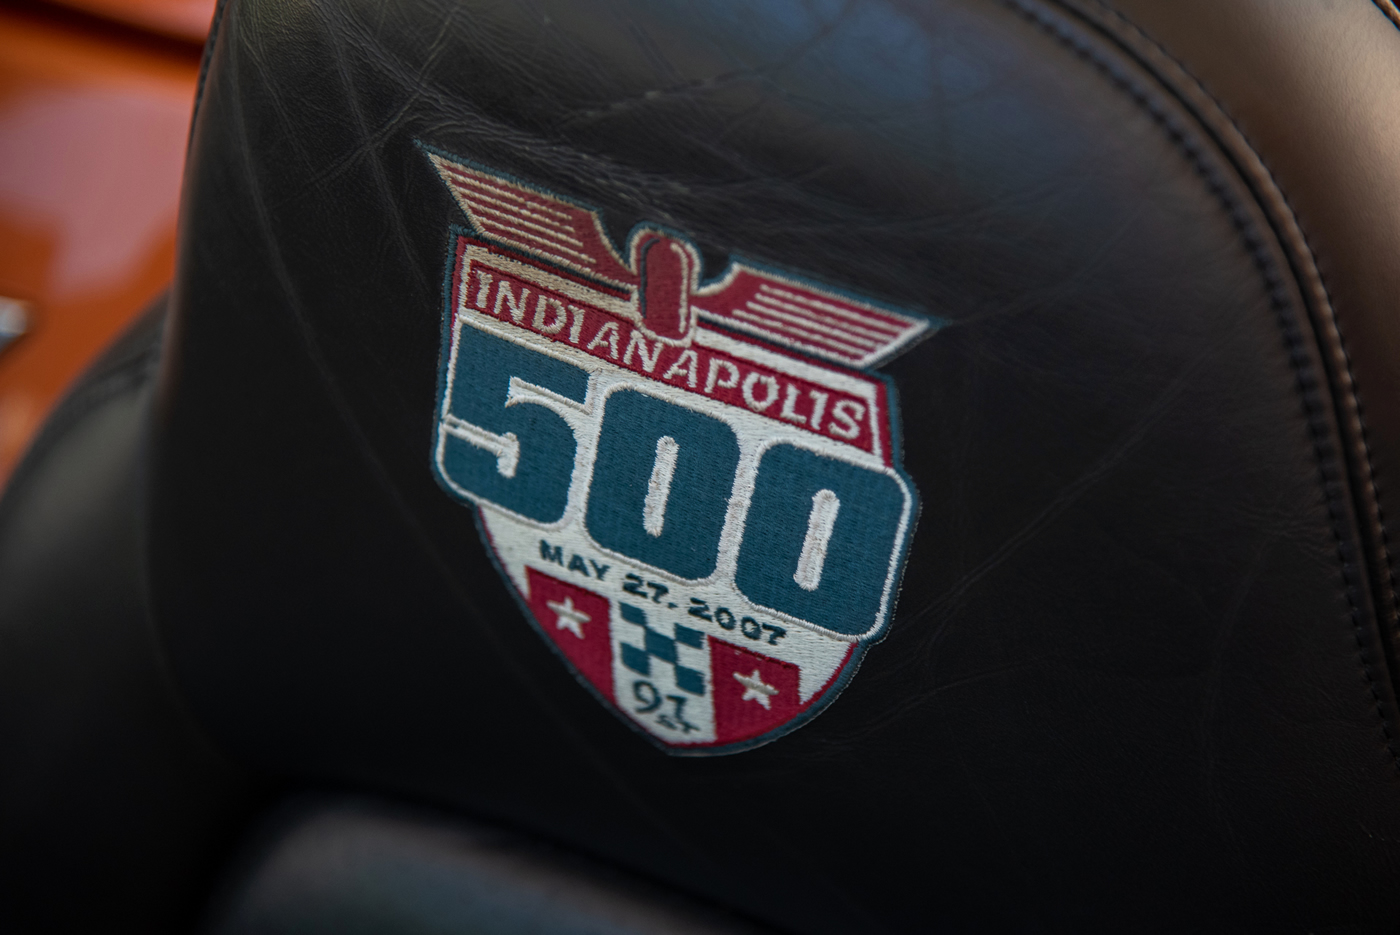 2007 Corvette Convertible Indy 500 Pace Car Edition